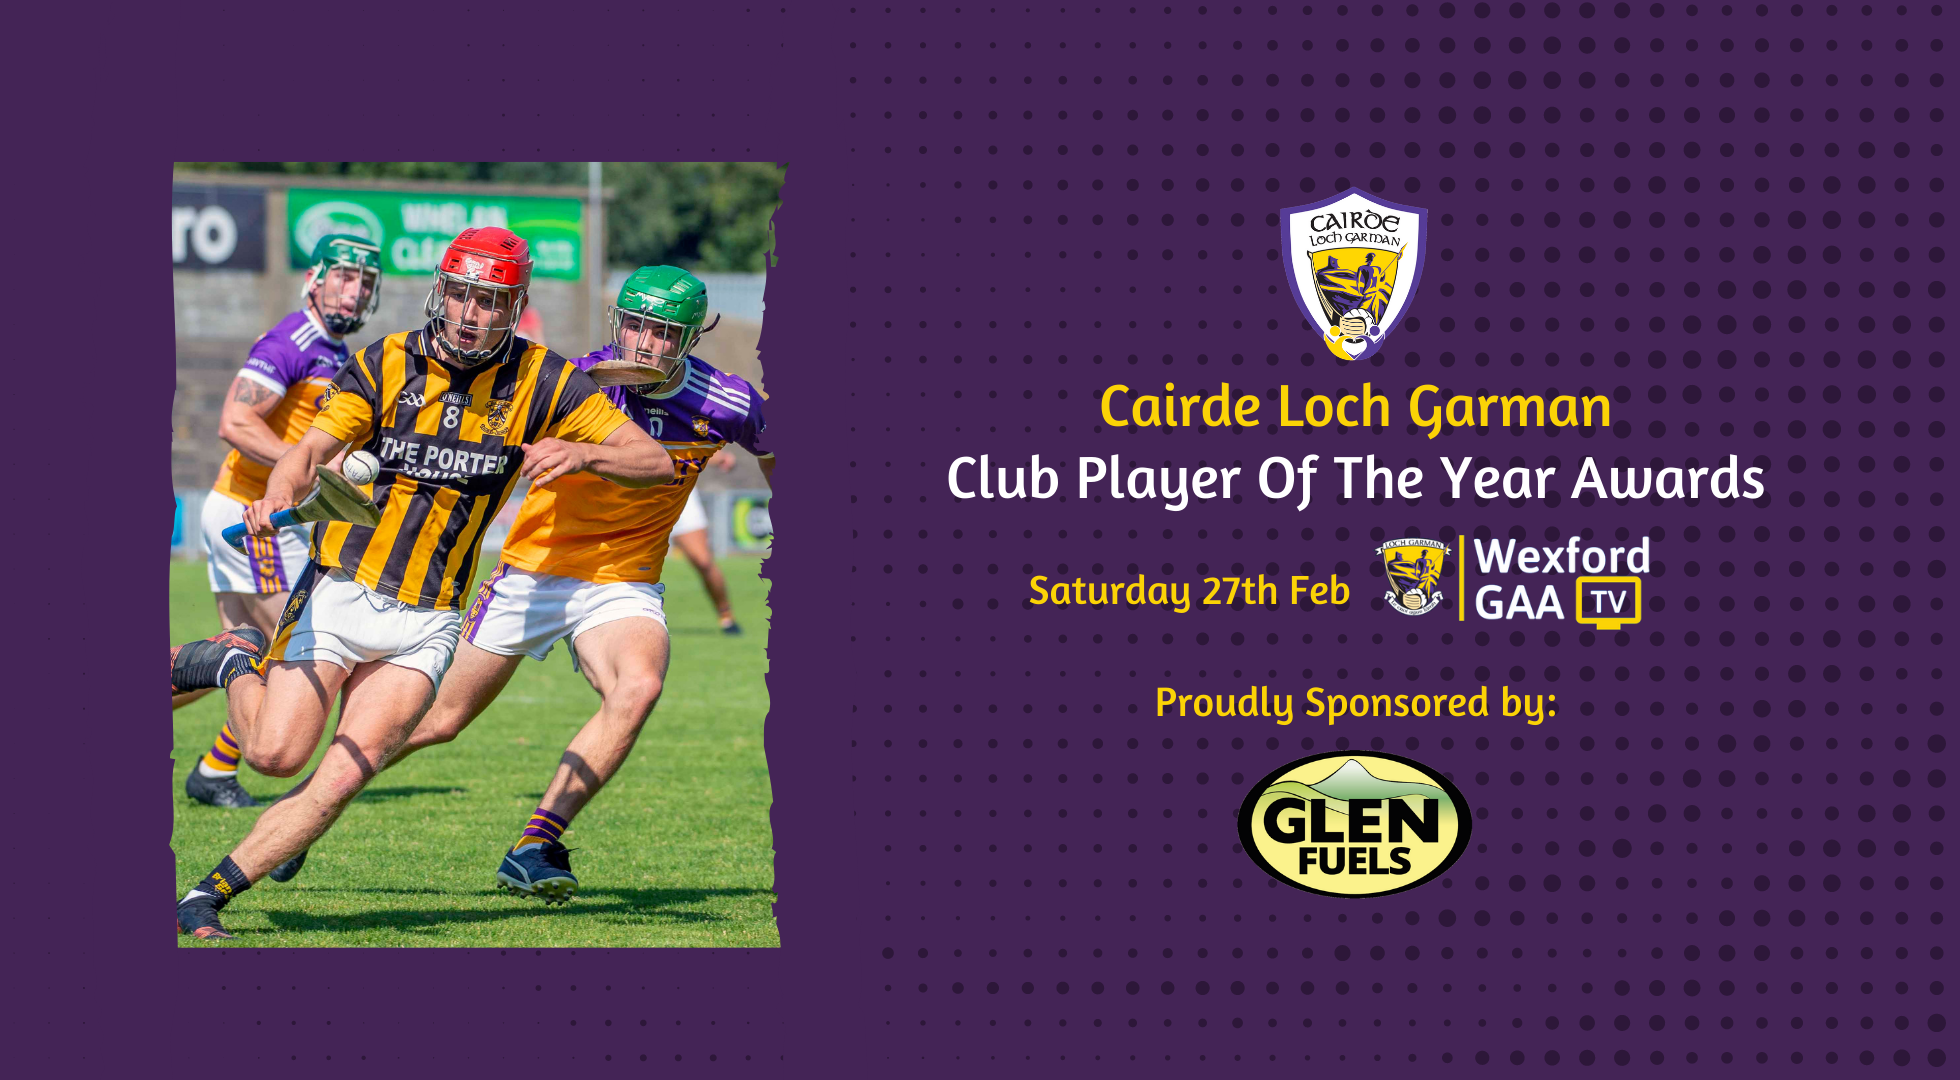 Cairde Loch Garman Club Player Awards – Hurling Nominations